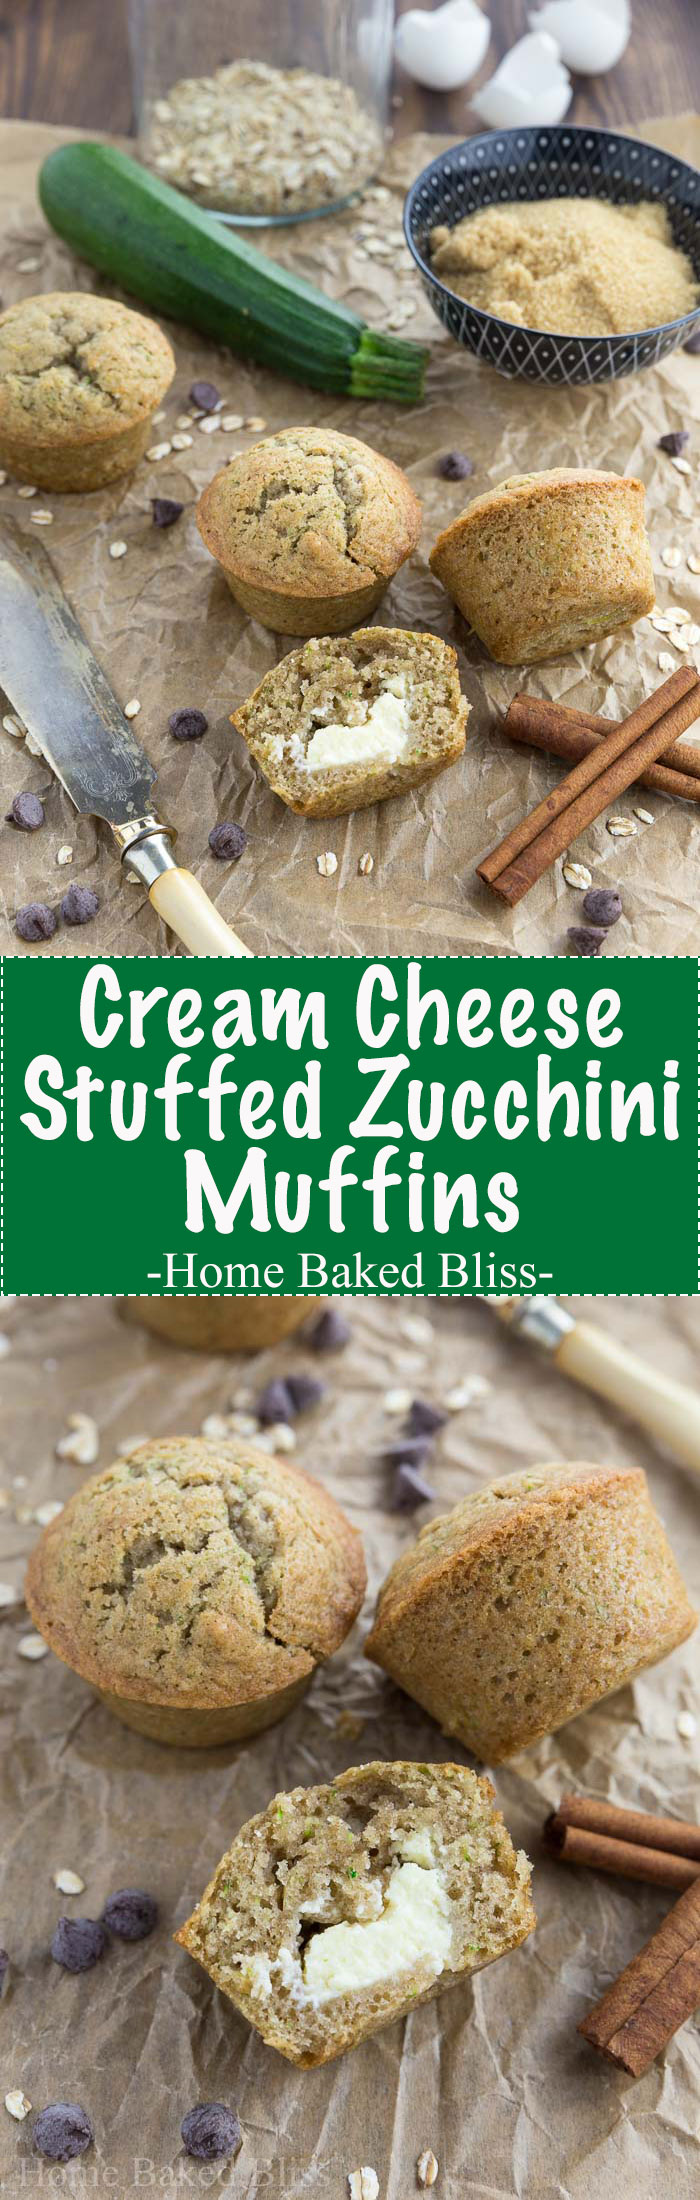 Cream cheese stuffed zucchini muffins next to a green zucchini and a butter knife